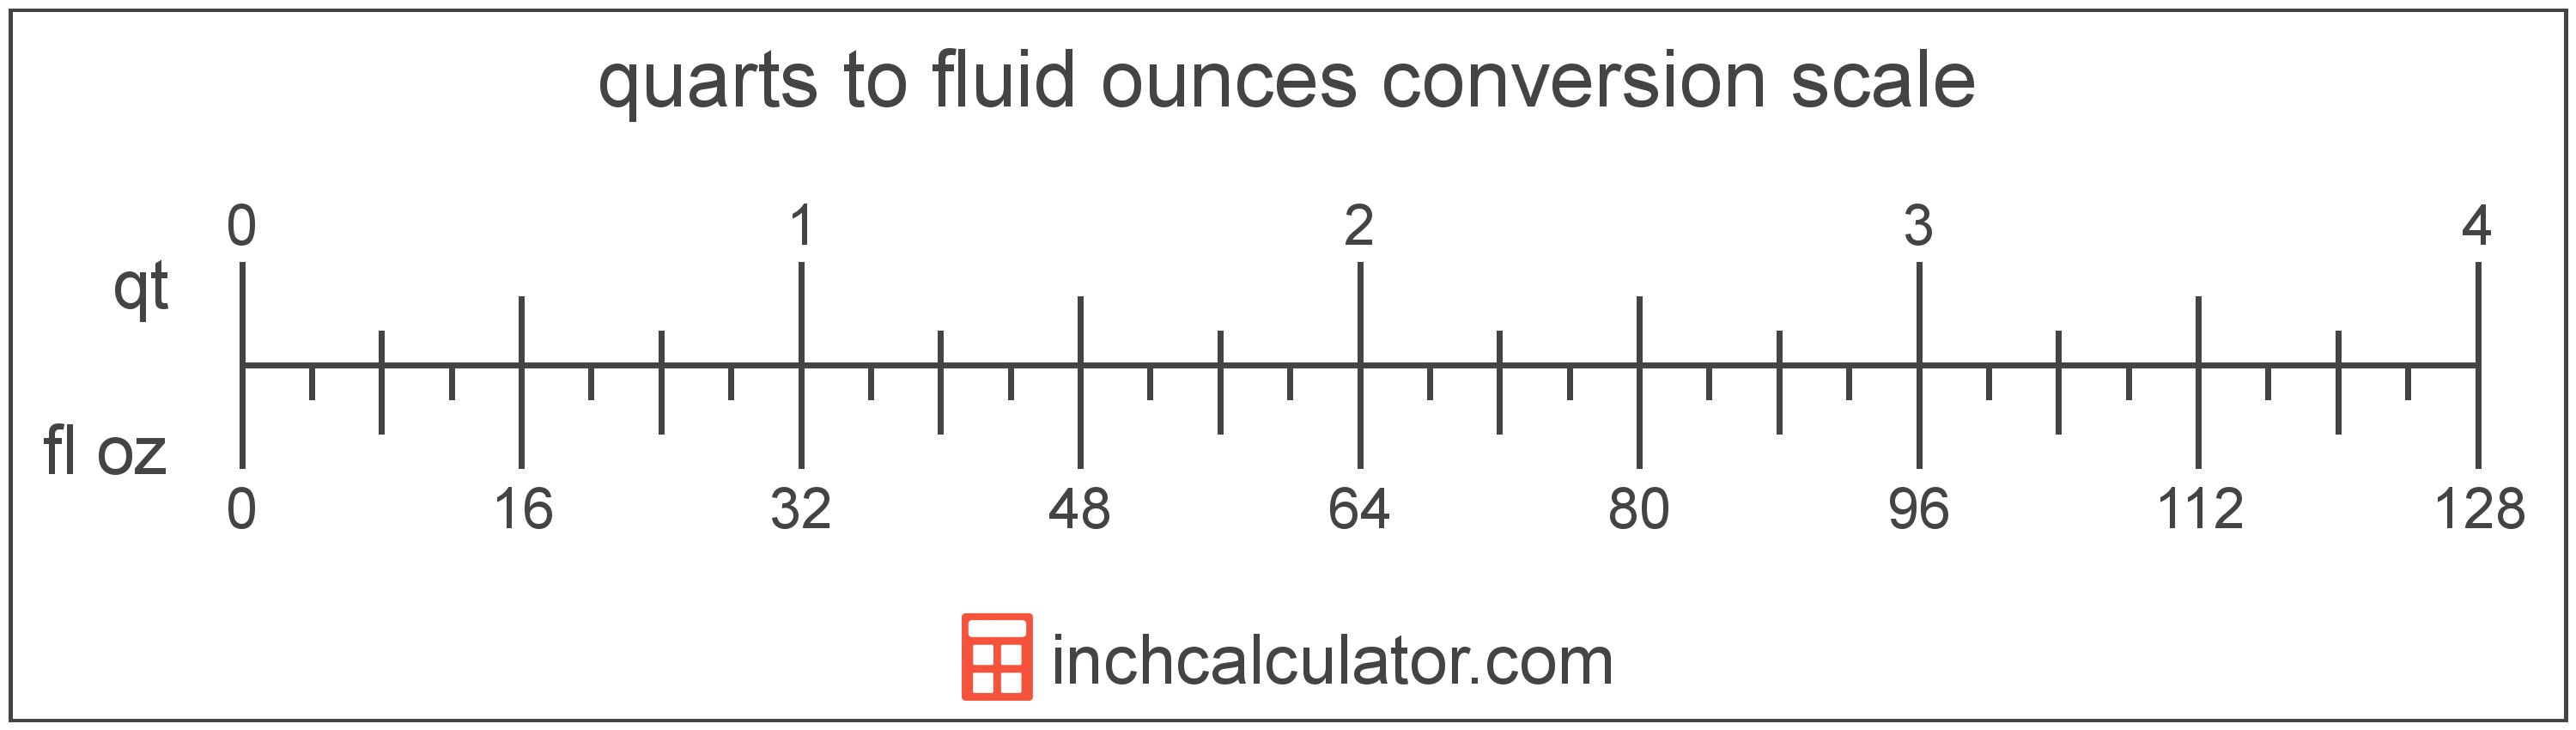 conversion scale showing fluid ounces and equivalent quarts volume values